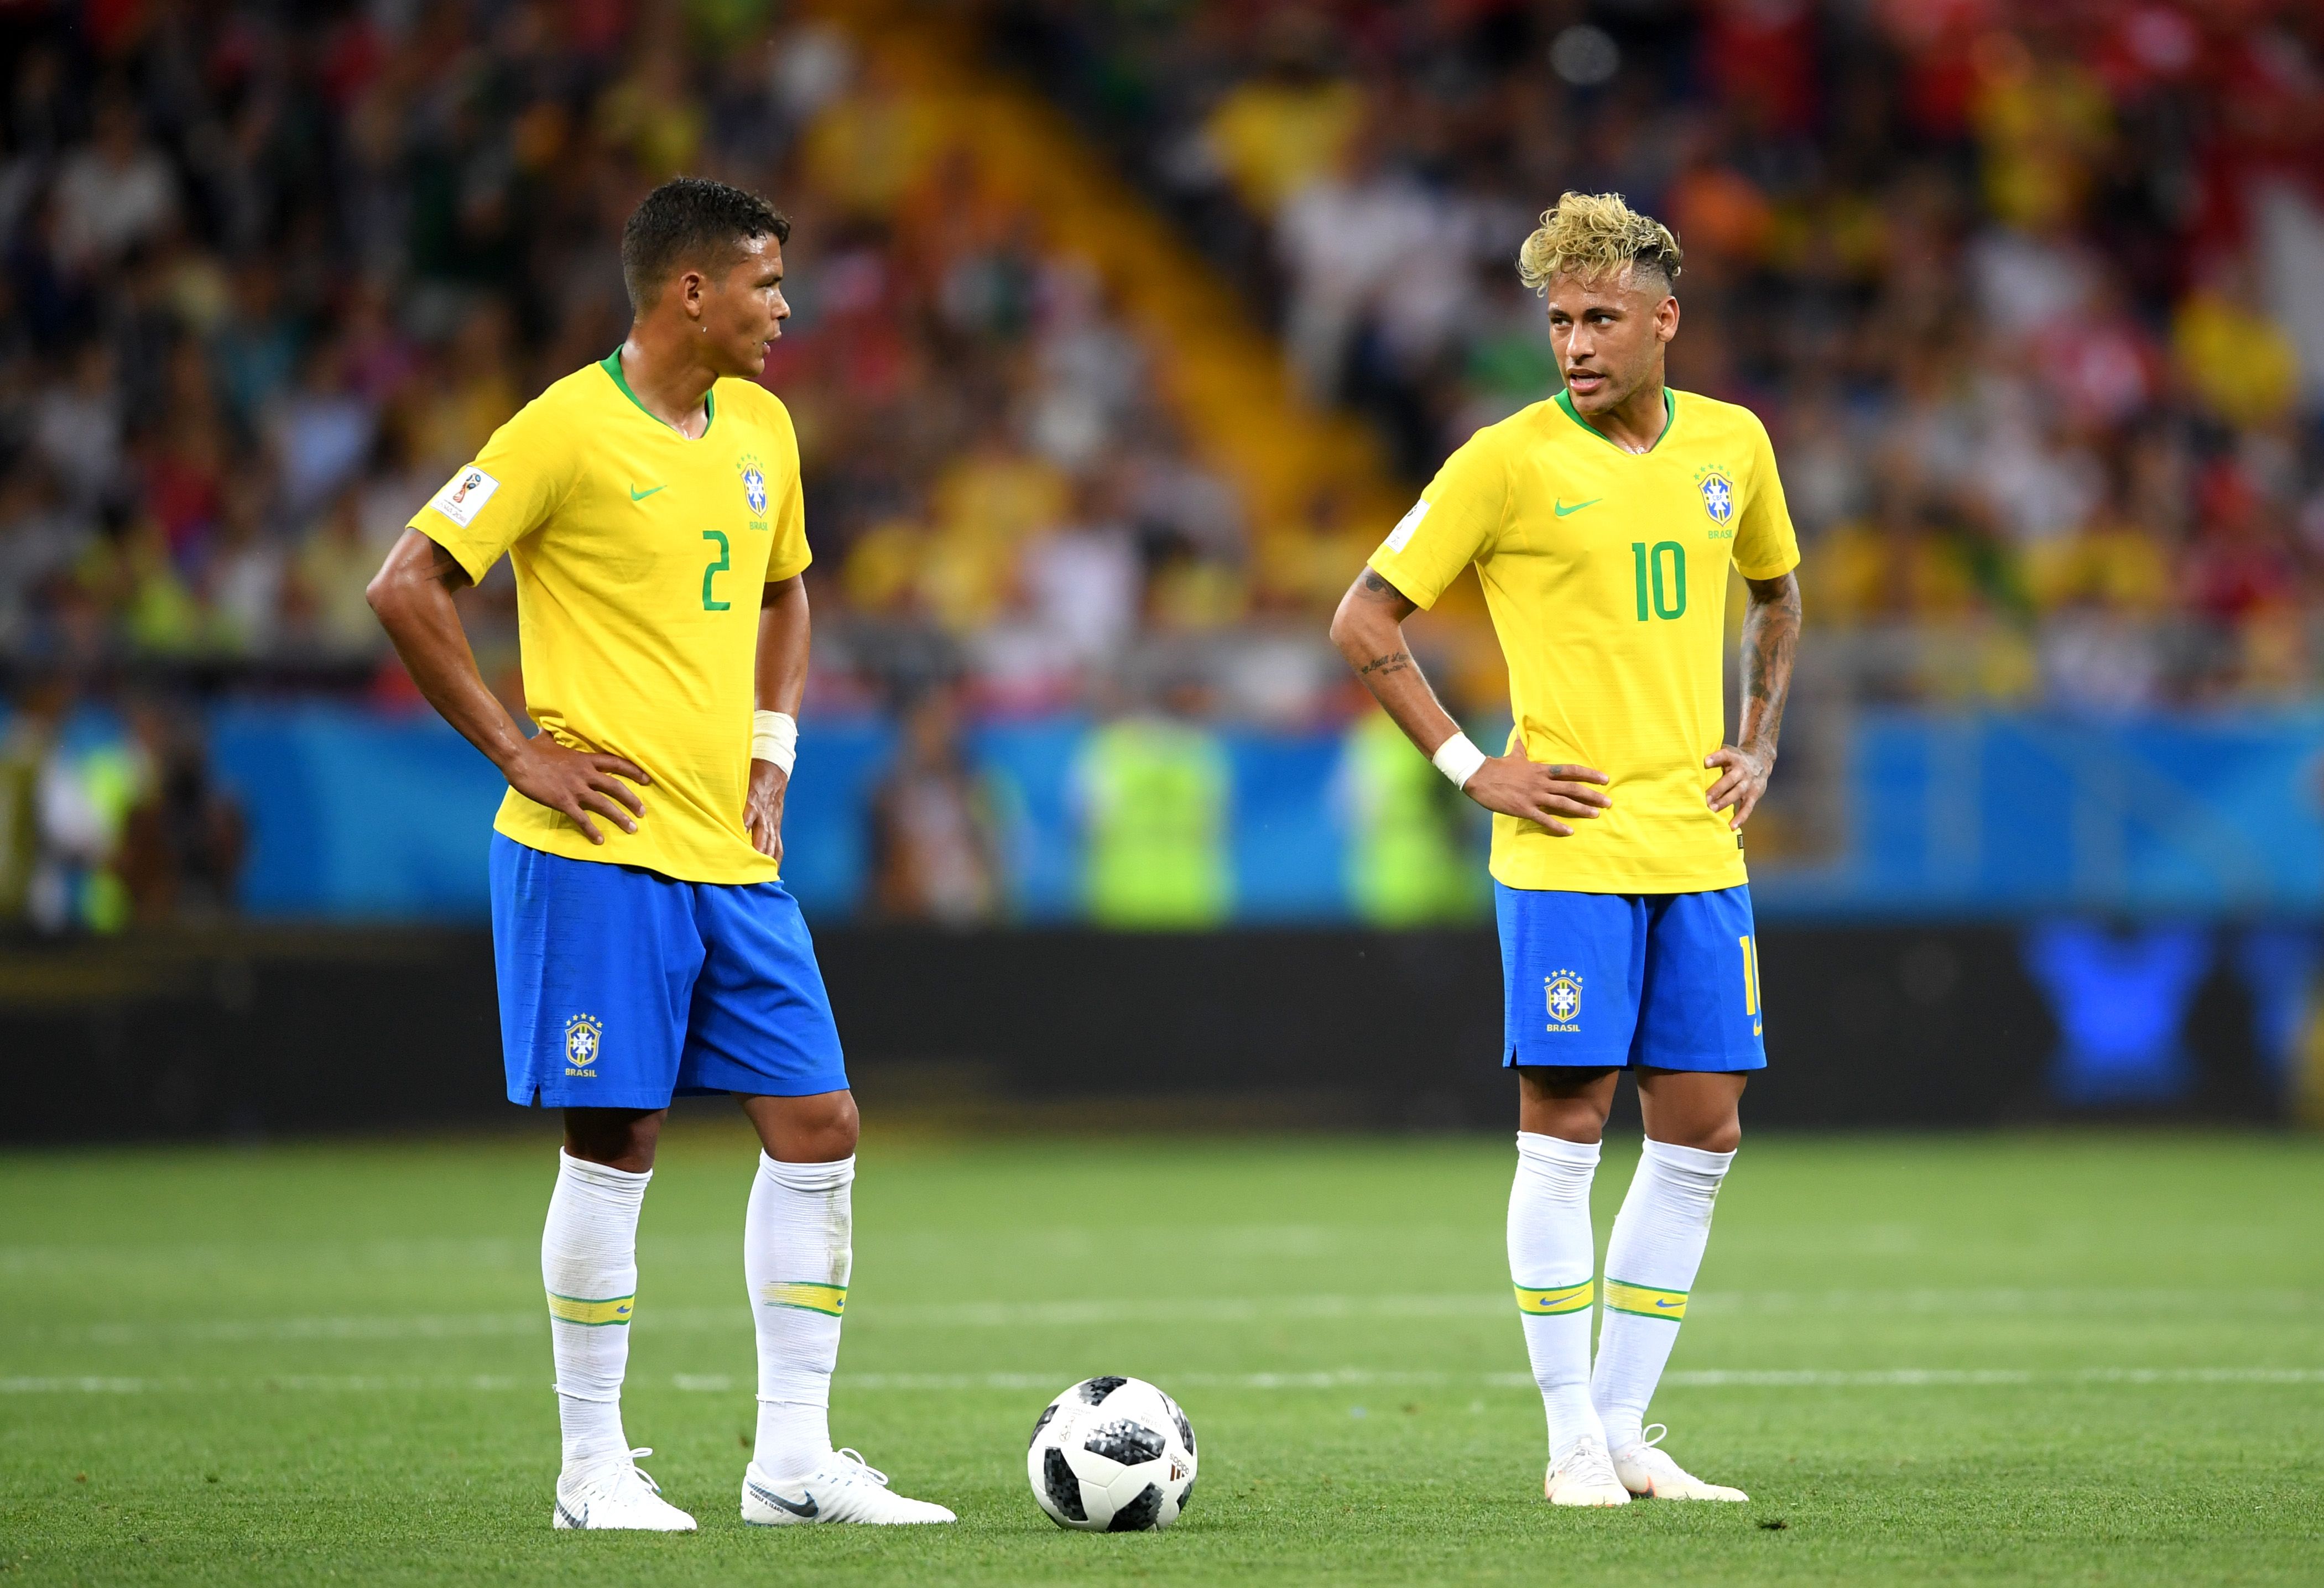 Бразилия — Эквадор прогноз 5 июня 2021: ставки и коэффициенты на матч отбора на ЧМ-2022